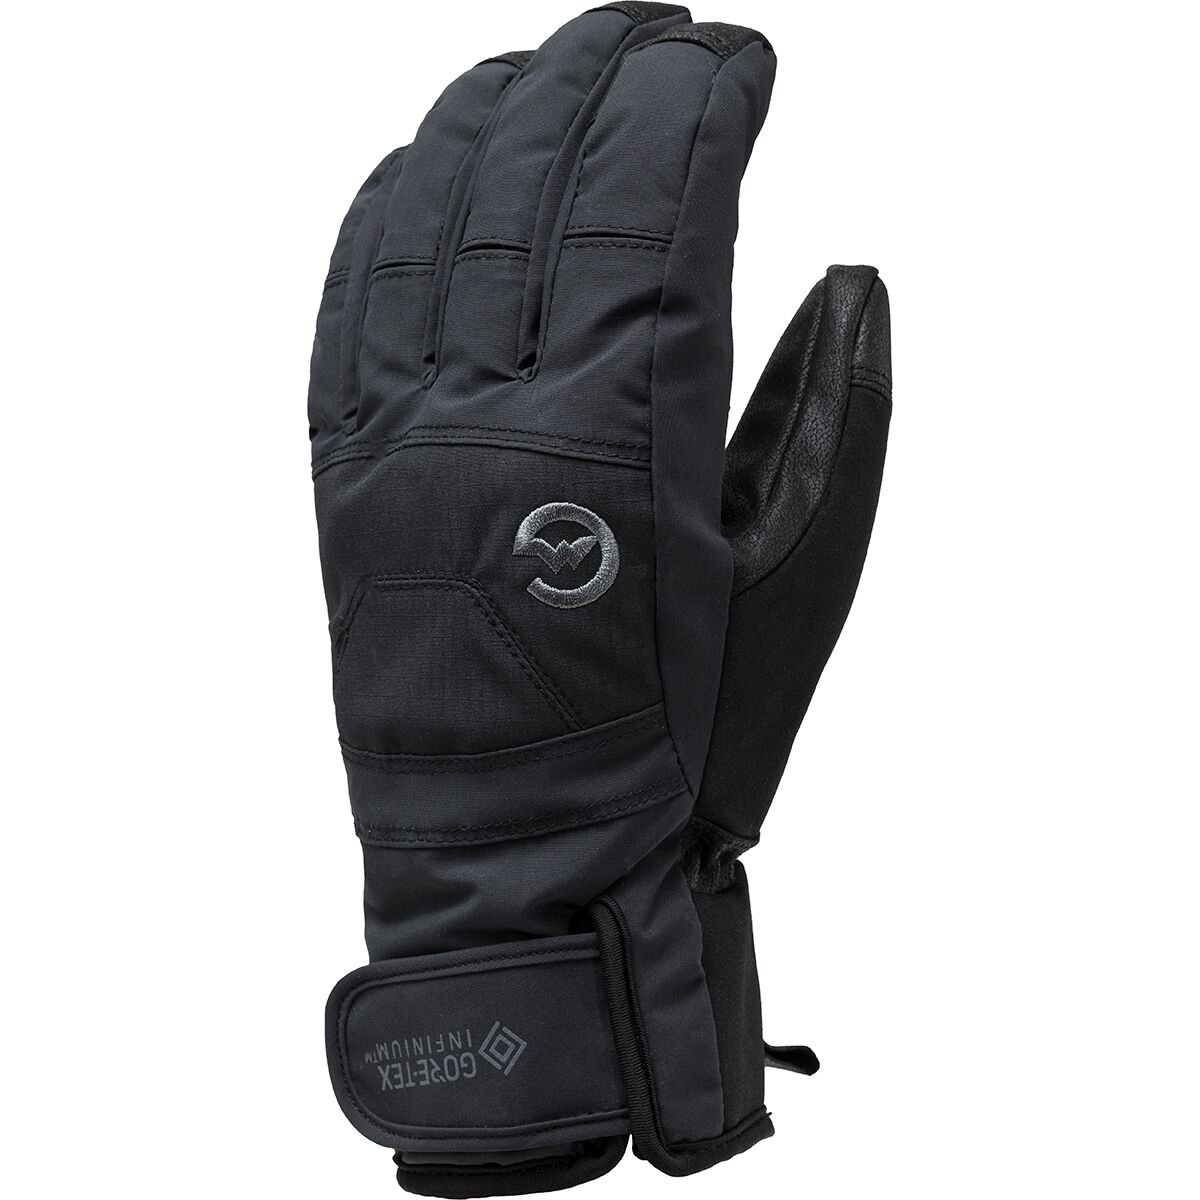 Gordini Swagger Glove - Men's Black